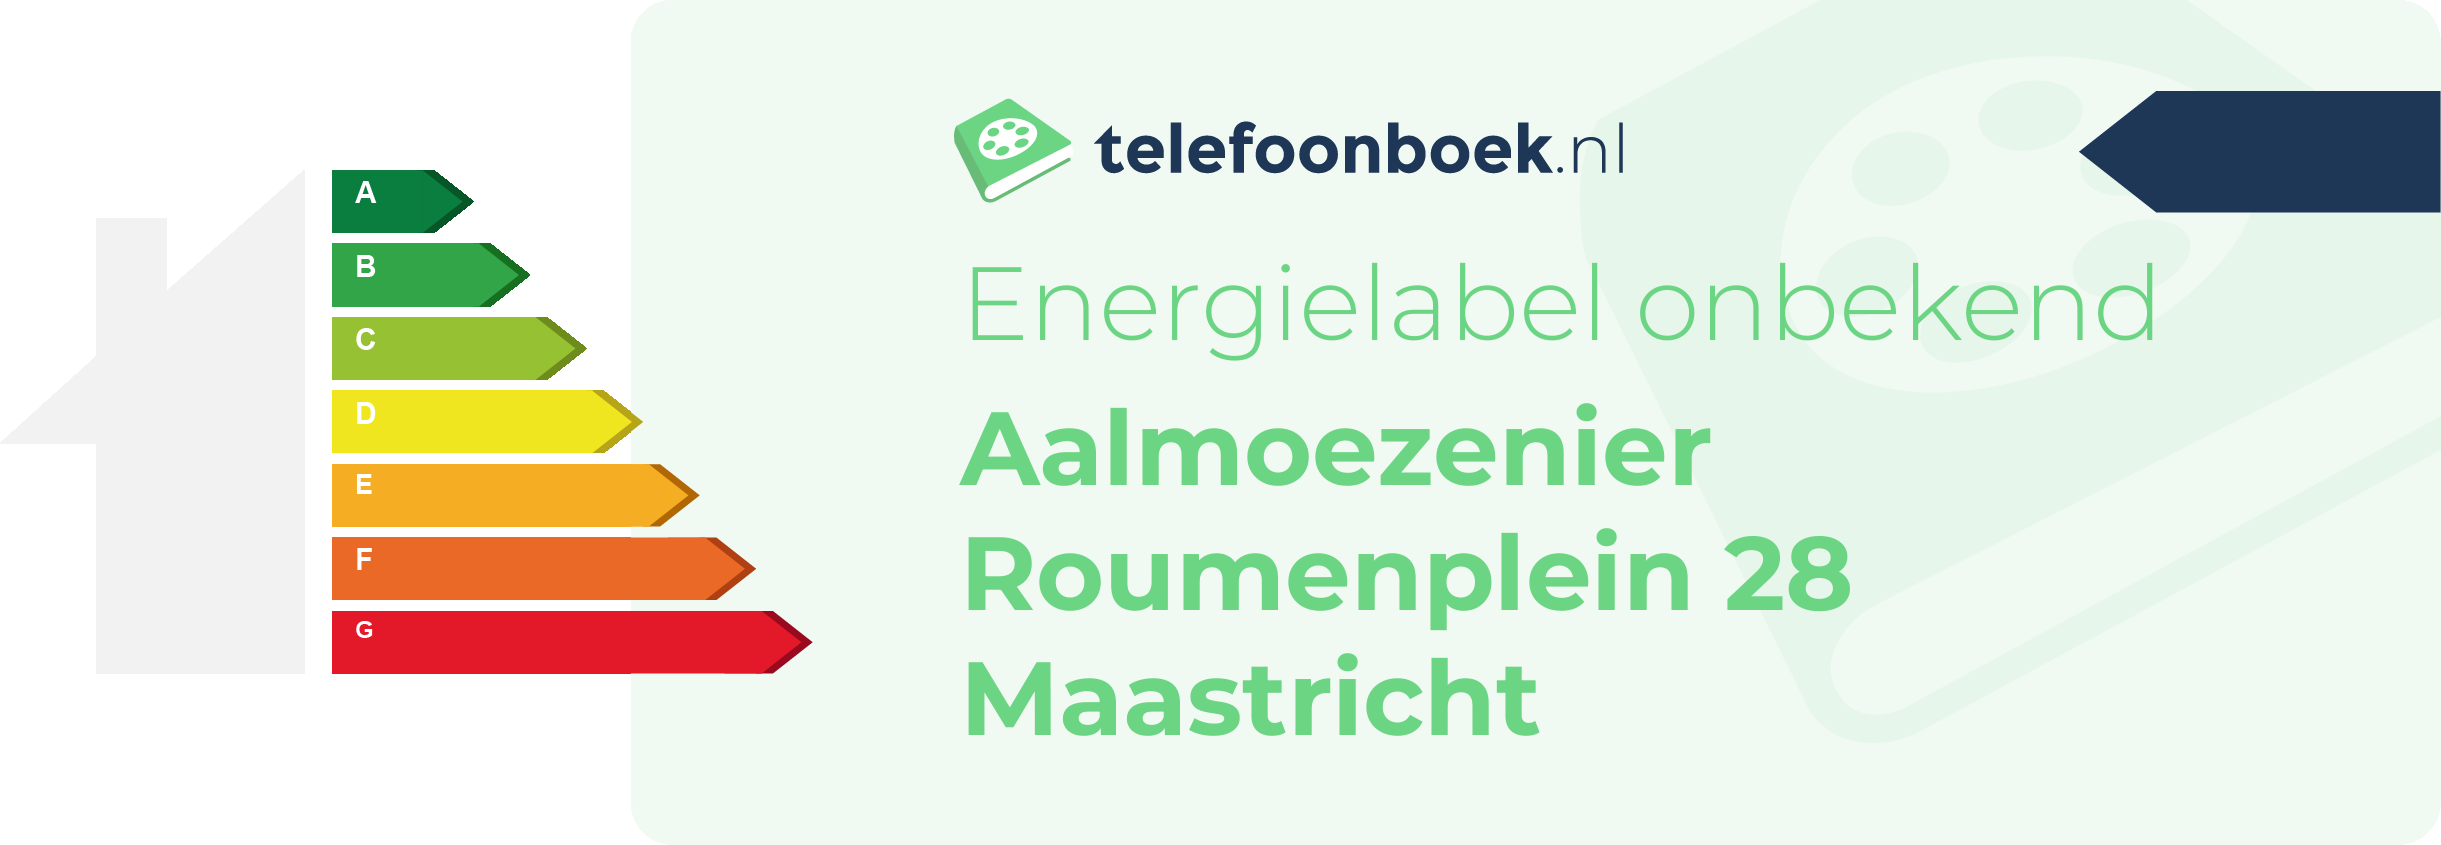 Energielabel Aalmoezenier Roumenplein 28 Maastricht